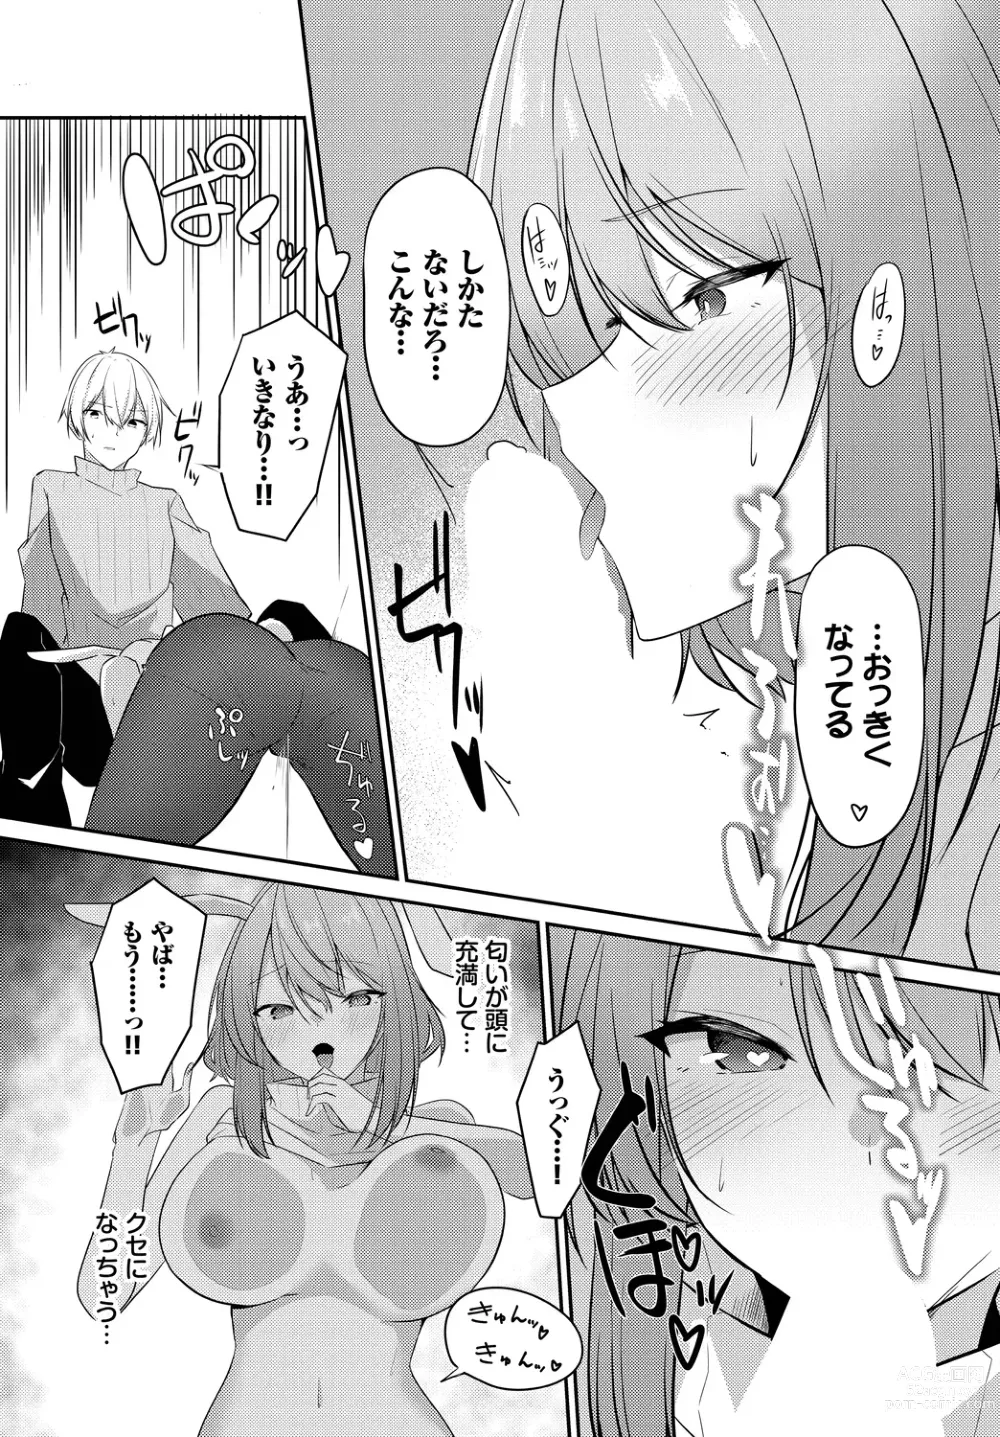 Page 151 of manga Meikyuu Lilac - Laberynth Lilac.